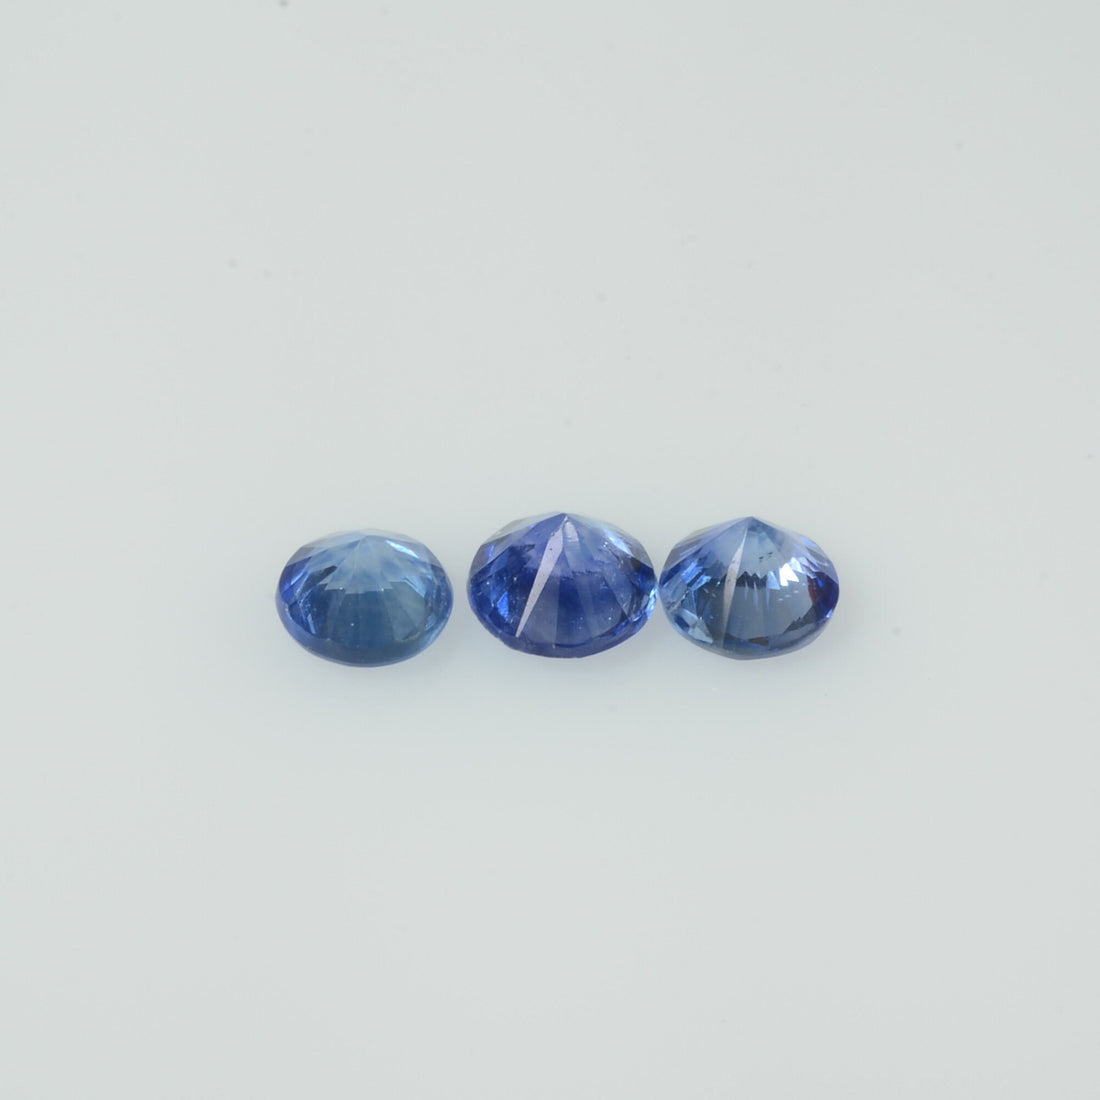 3.8-5.0 mm Natural Blue Sapphire Loose Gemstone Round Diamond Cut Vs Quality Color